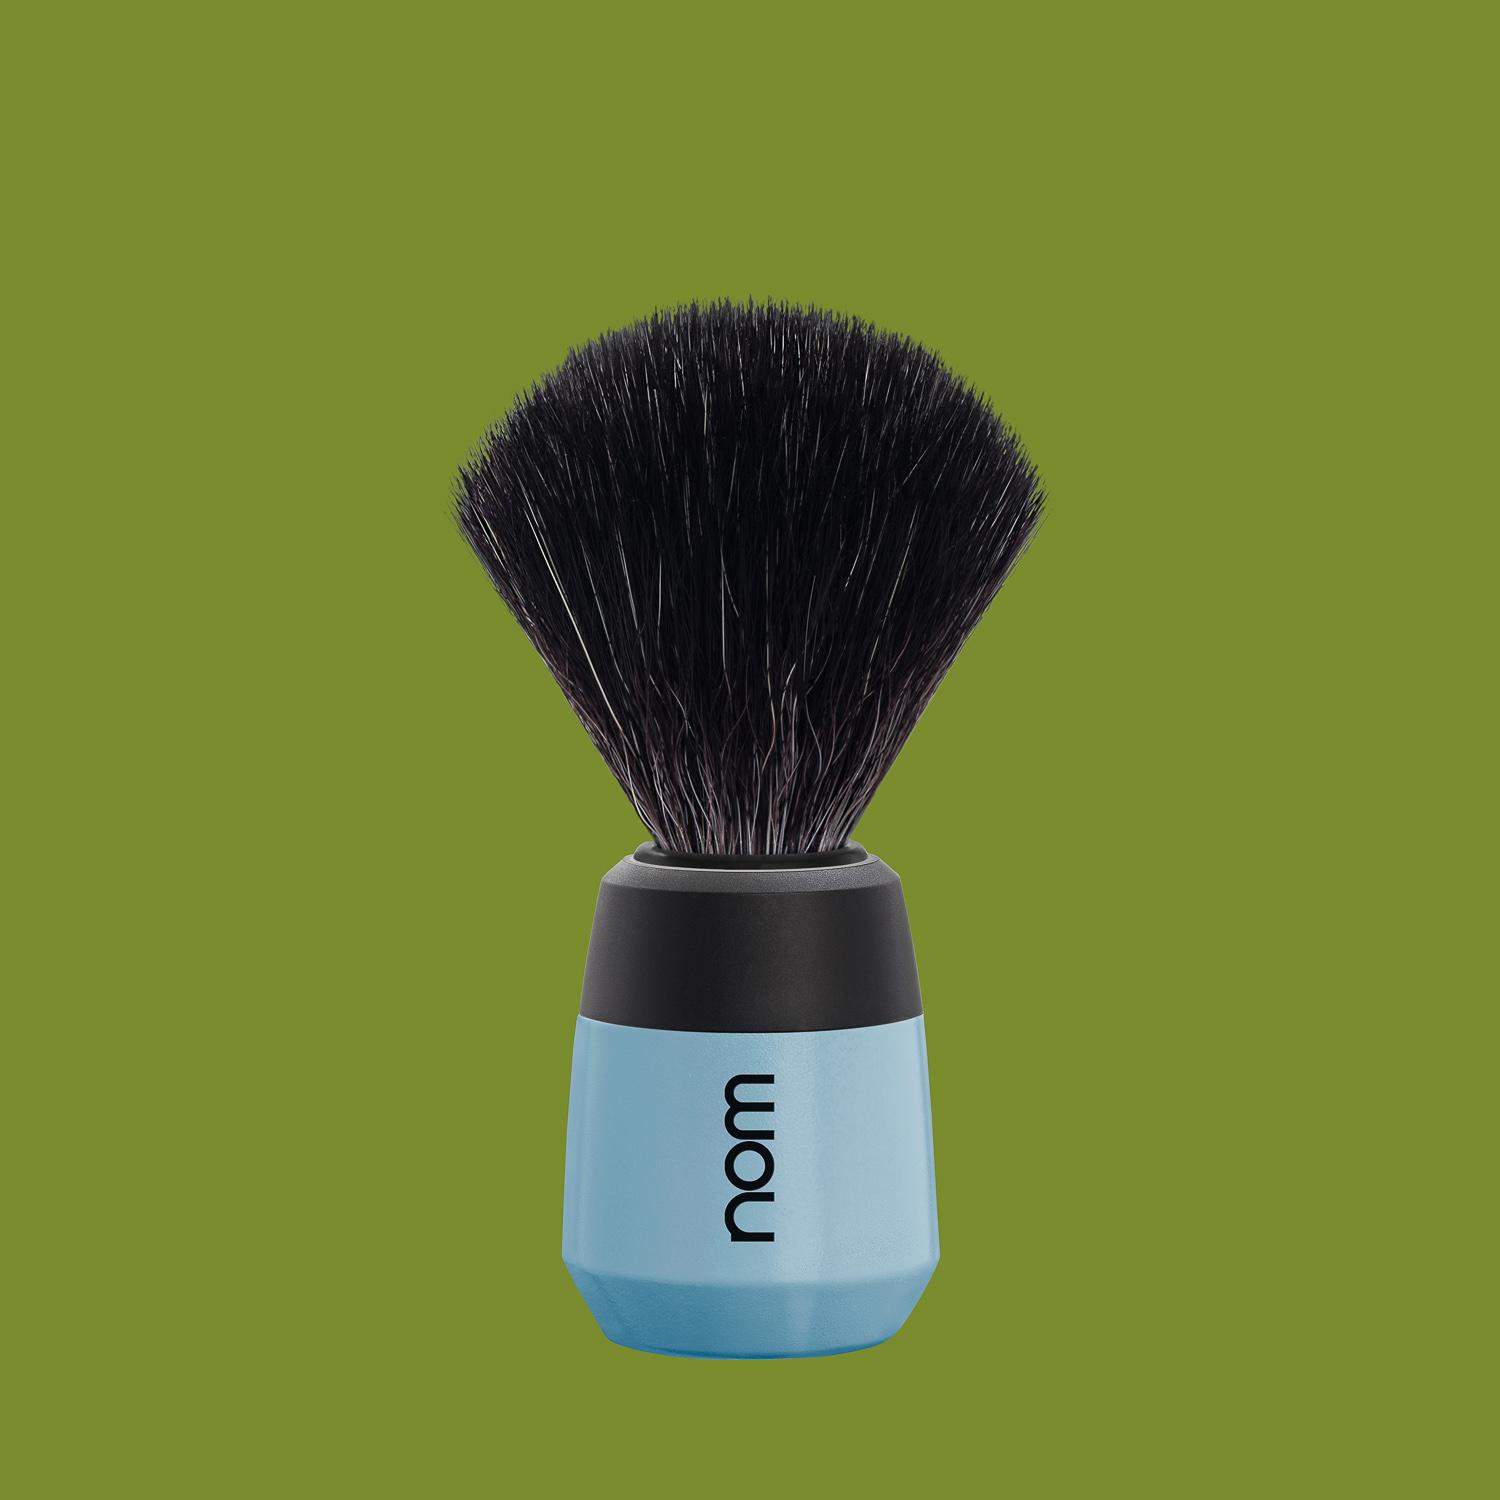 nom MAX, Fjord, Black Fibre Shaving Brush